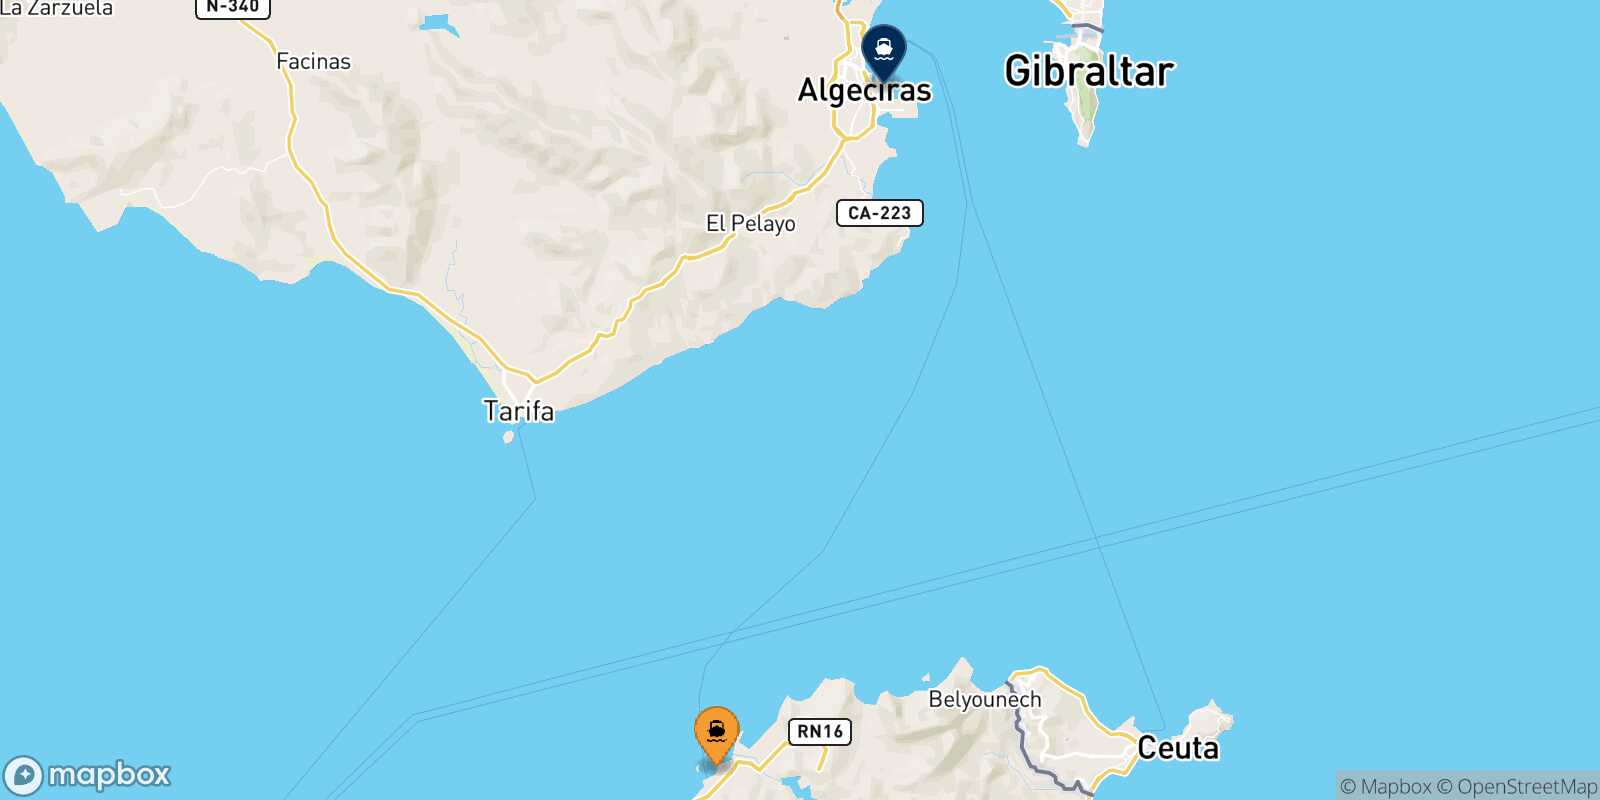 Mappa della rotta Tangeri Med Algeciras